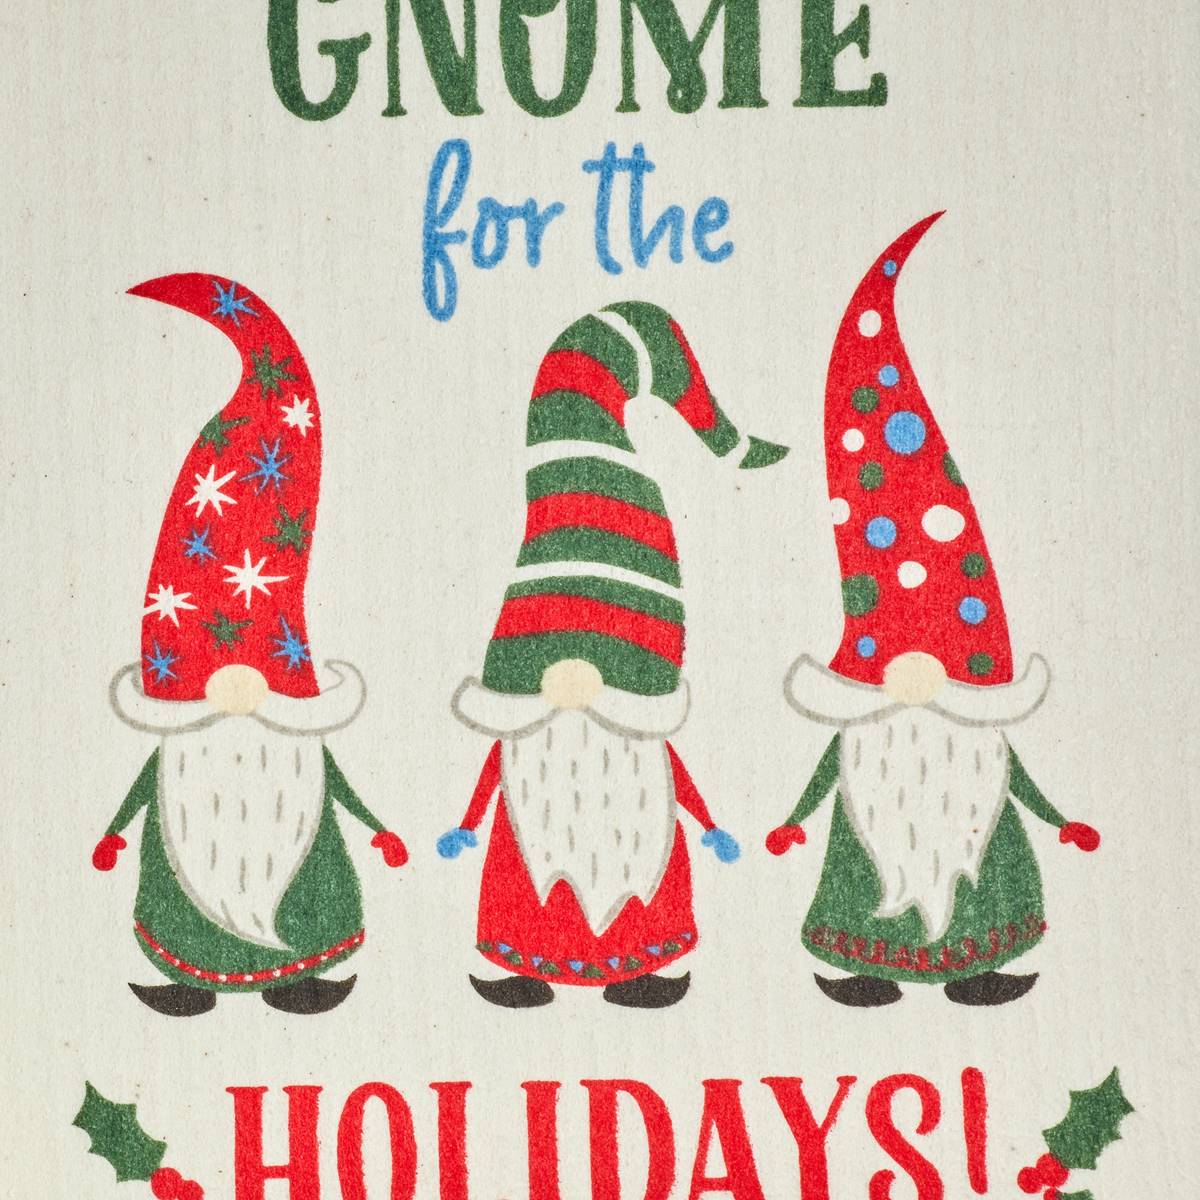 DII(R) Gnome Holidays Swedish Dishcloth Set Of 3